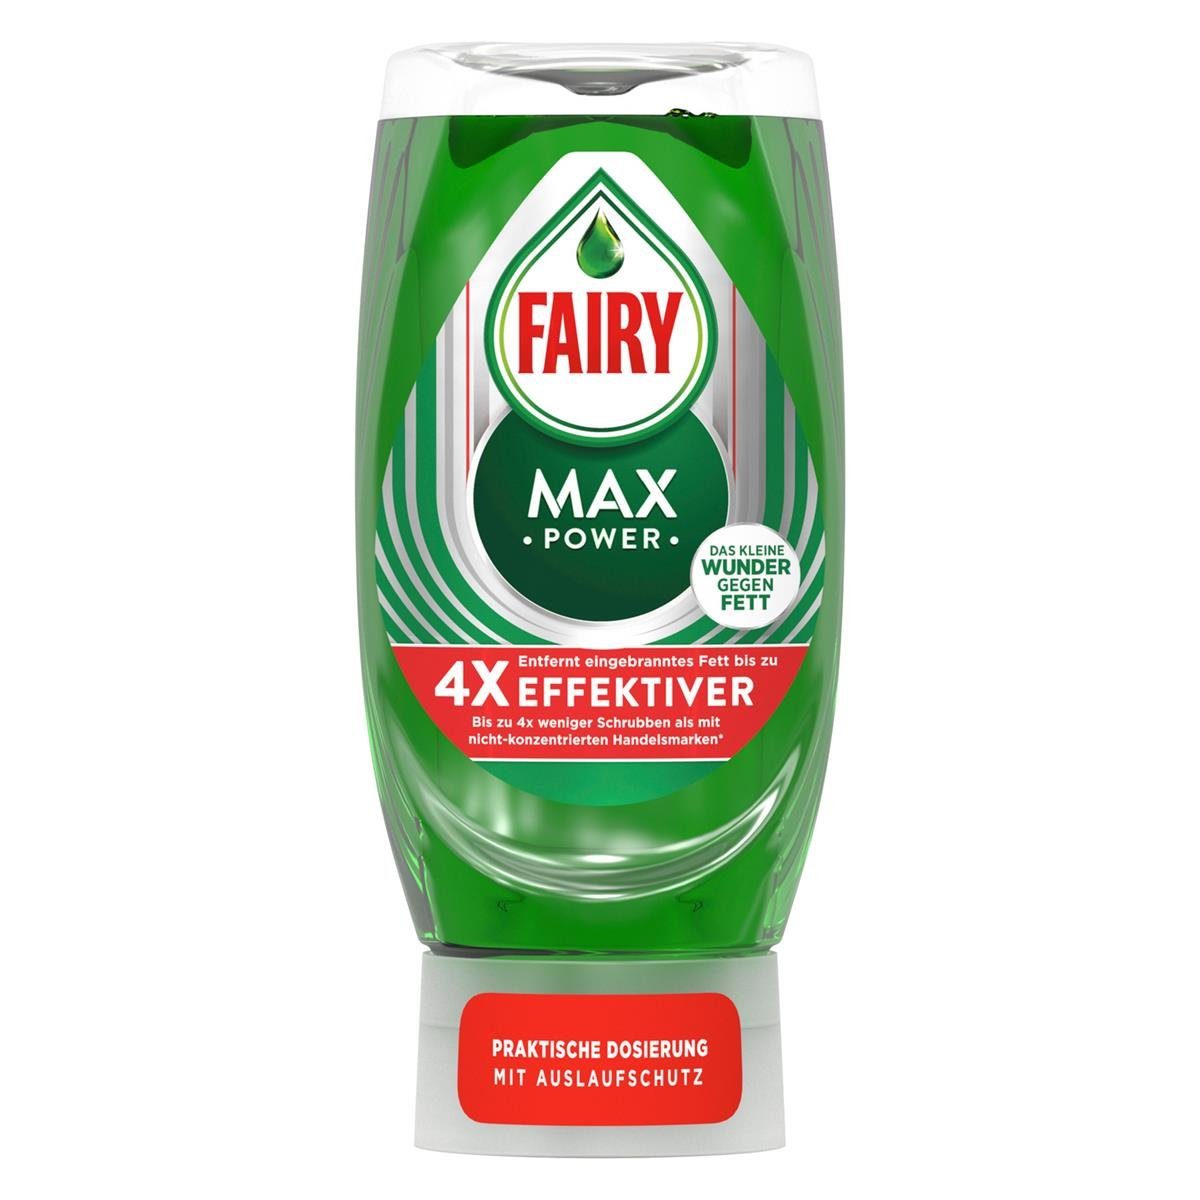 Fairy Fairy Spülmittel Max Power 370ml - Wunder gegen Fett (1er Pack) Geschirrspülmittel